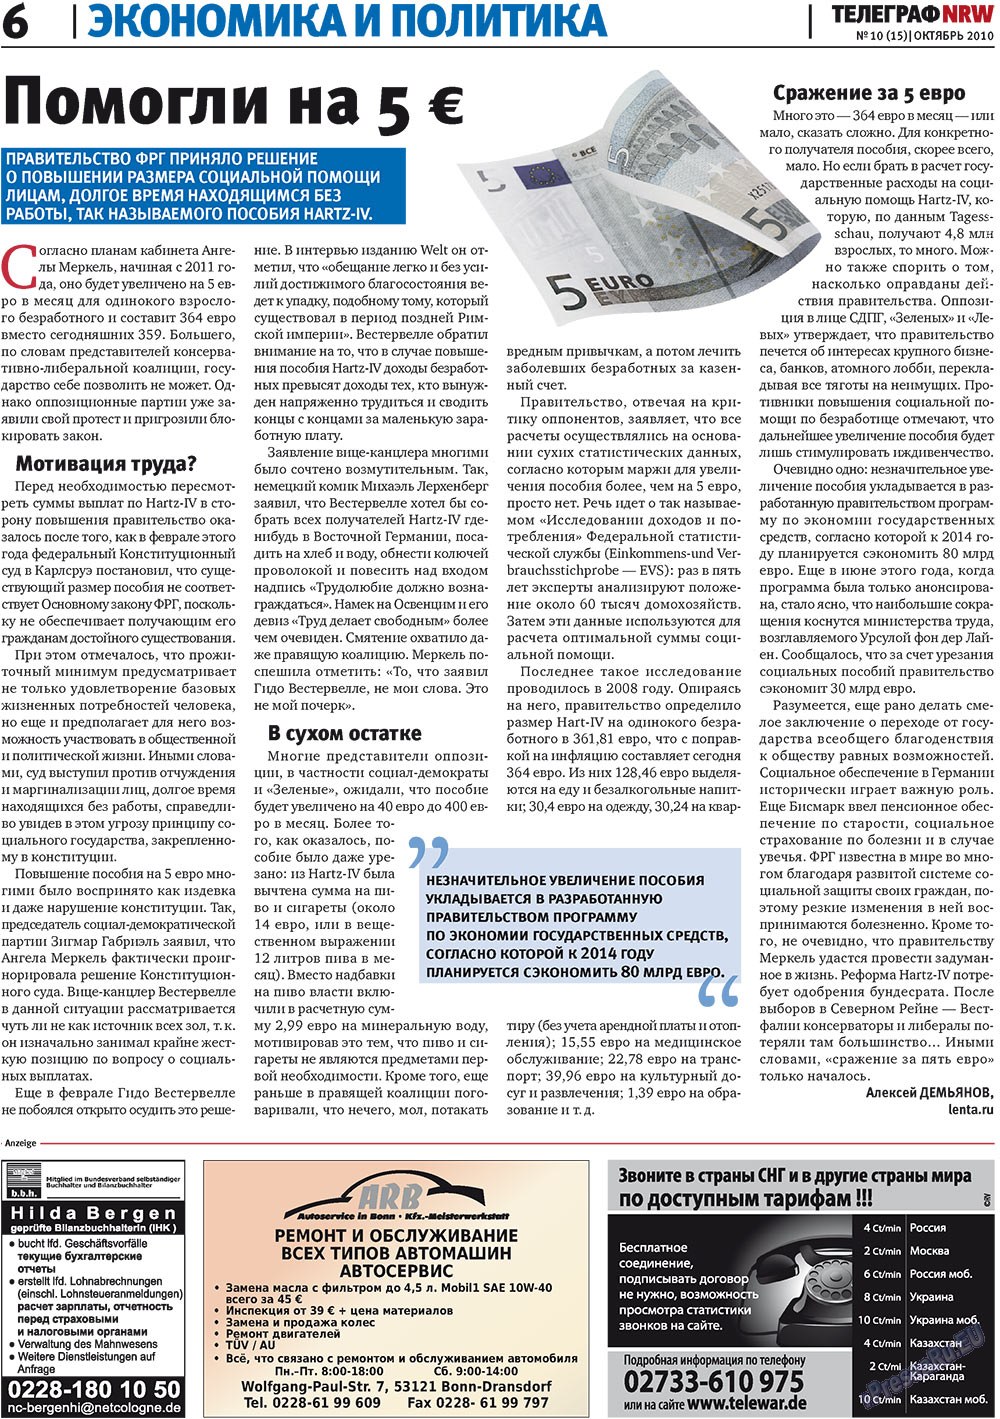 Телеграф NRW, газета. 2010 №10 стр.6